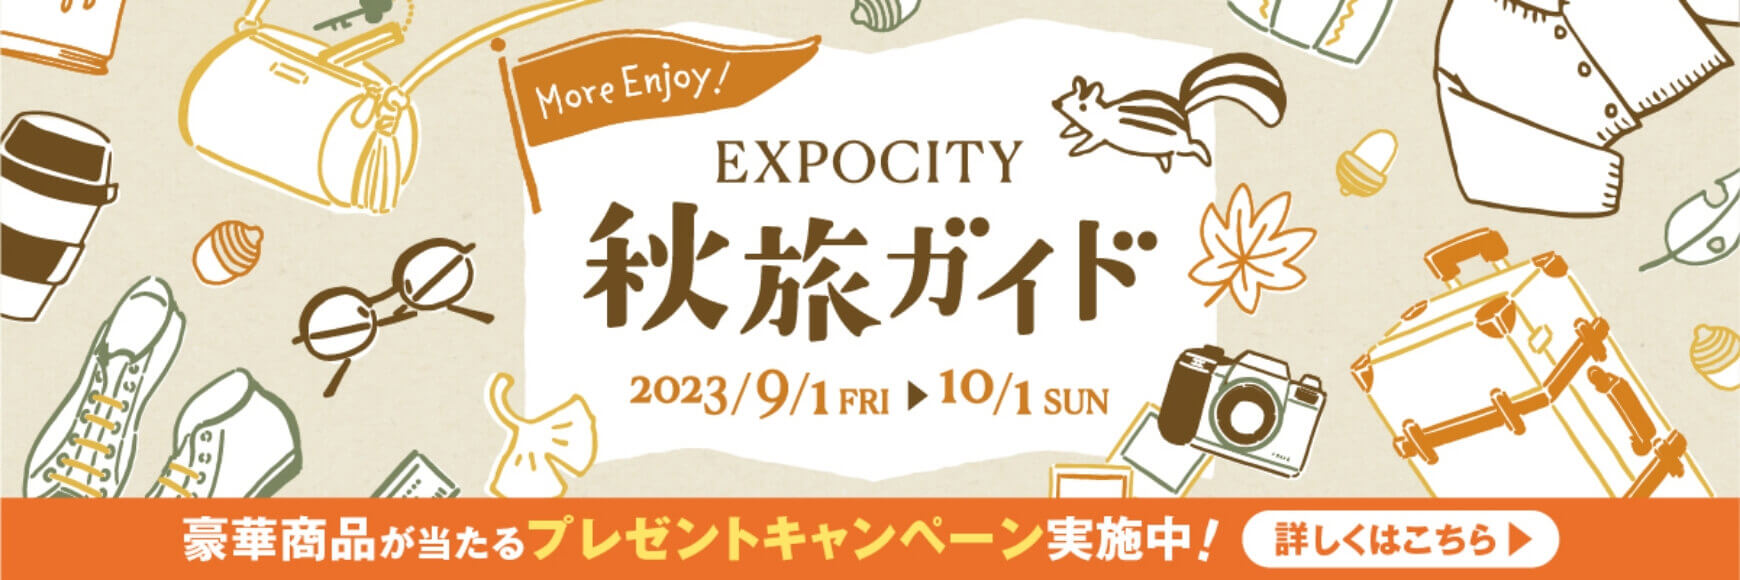 EXPOCITY秋旅ガイド